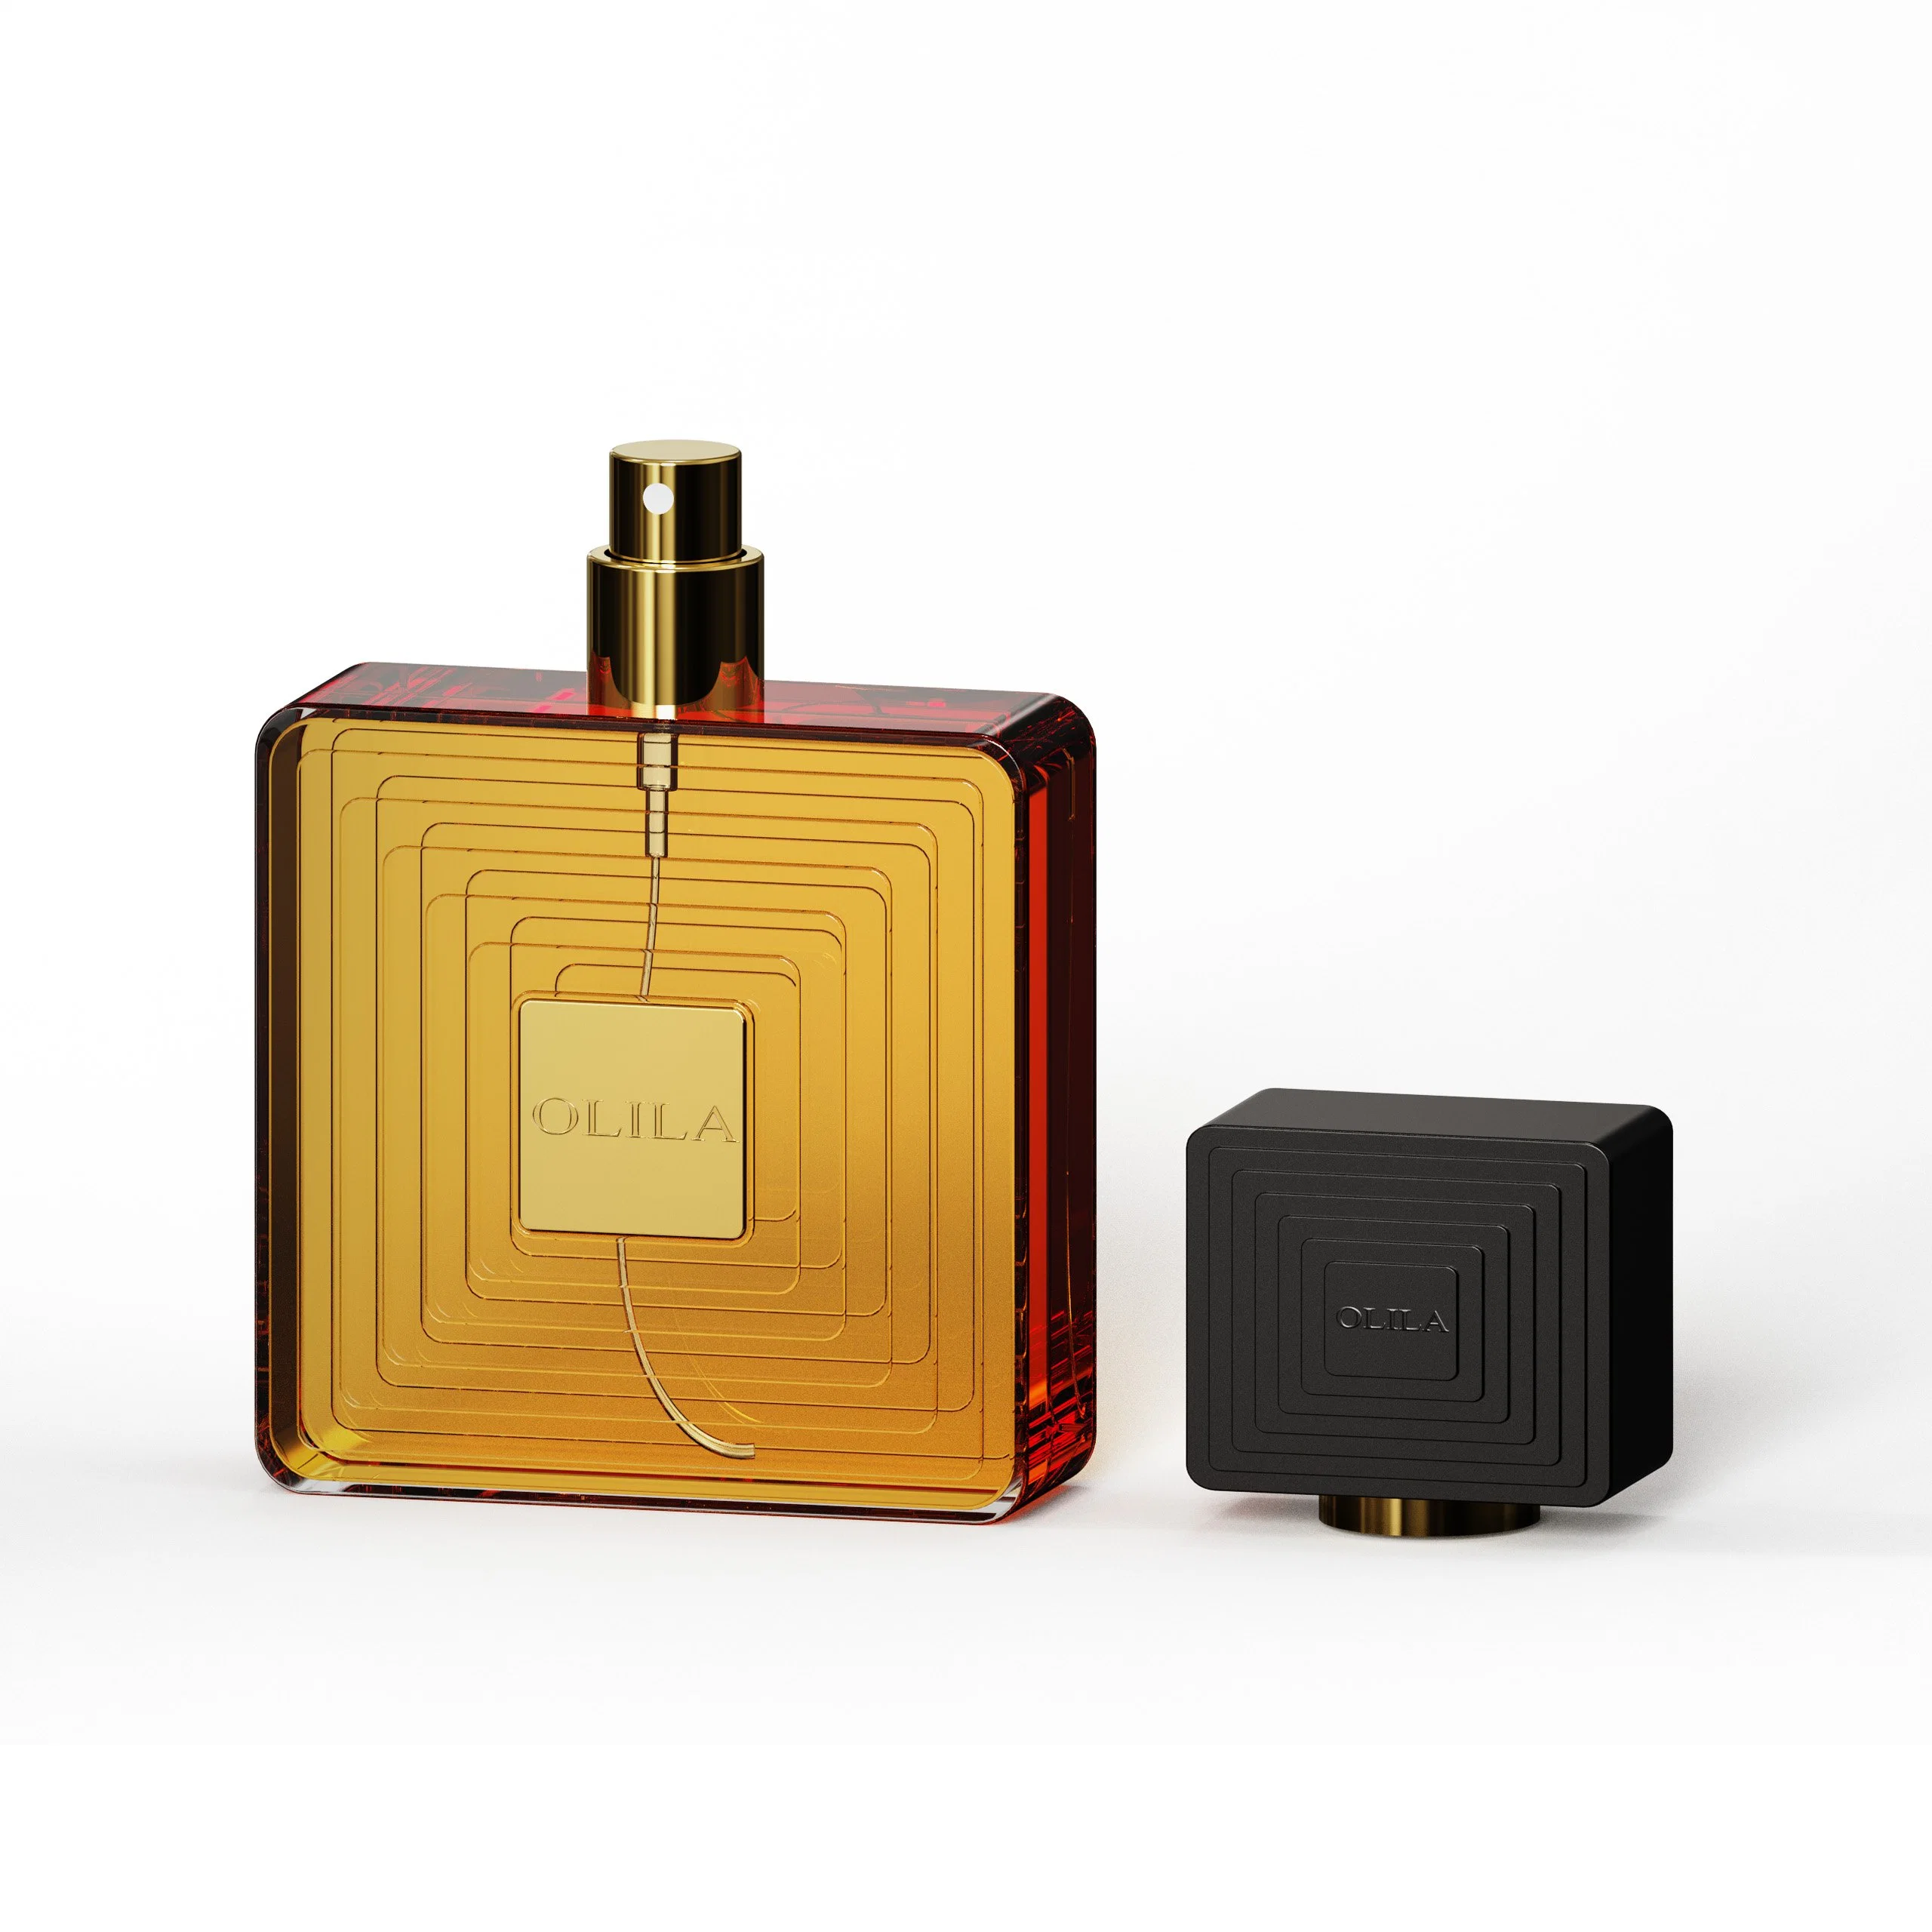 Botella de perfume de vidrio atomizador de spray con tapa de lujo dorada vacía redonda de 100 ml personalizada.